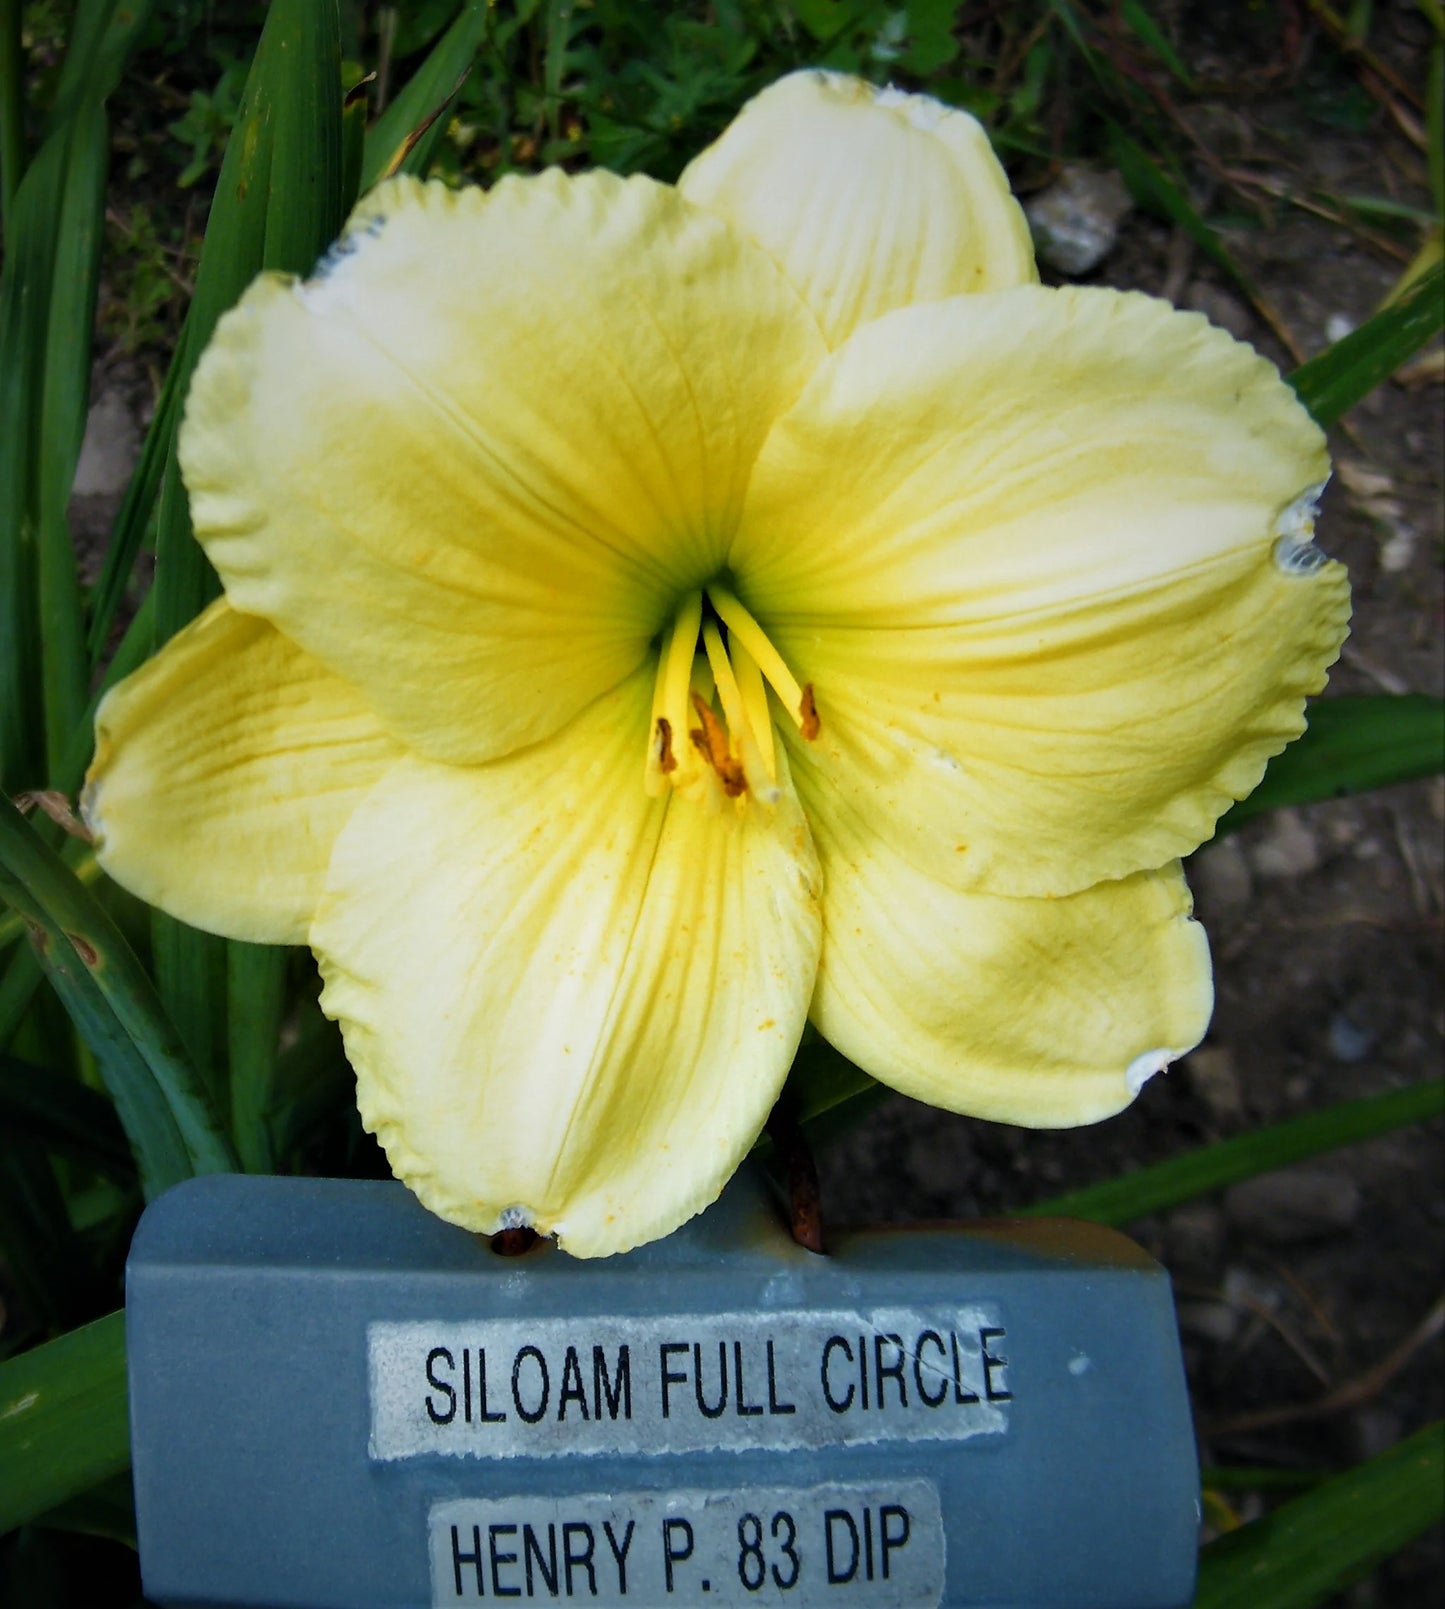 SILOAM FULL CIRCLE